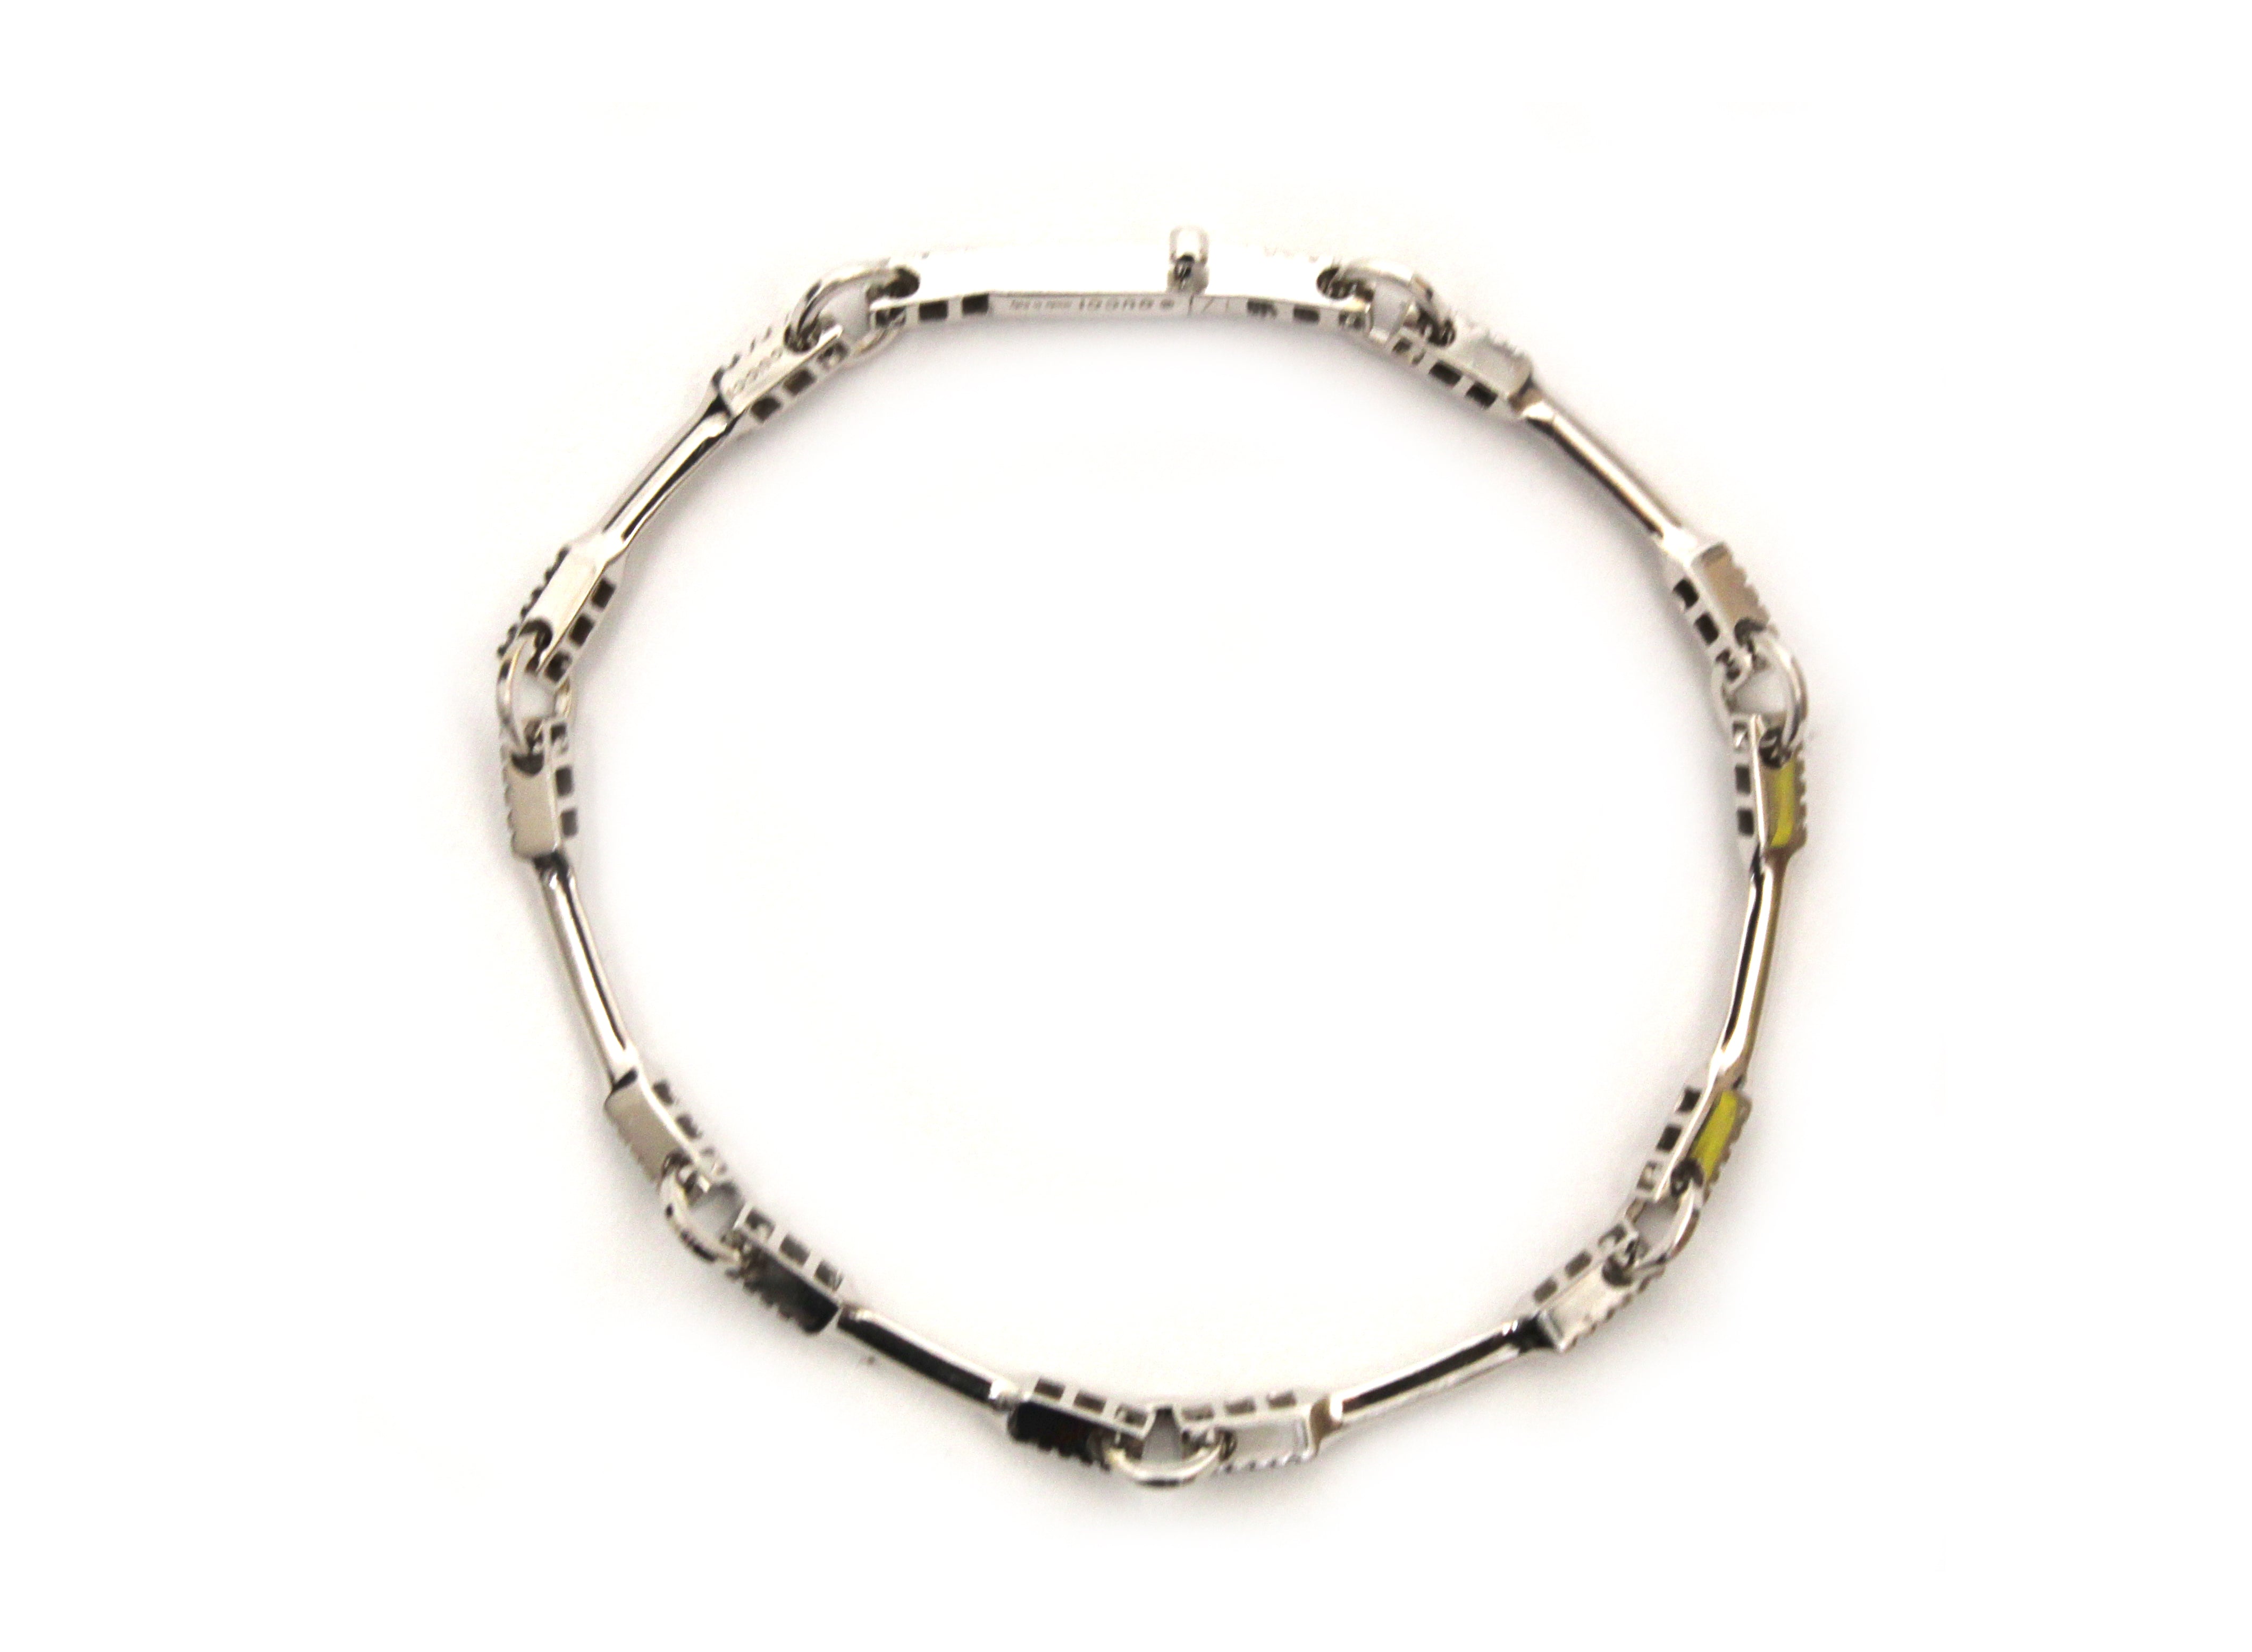 Authentic Gucci 18K White Gold Interlocking Link Diamond Bracelet